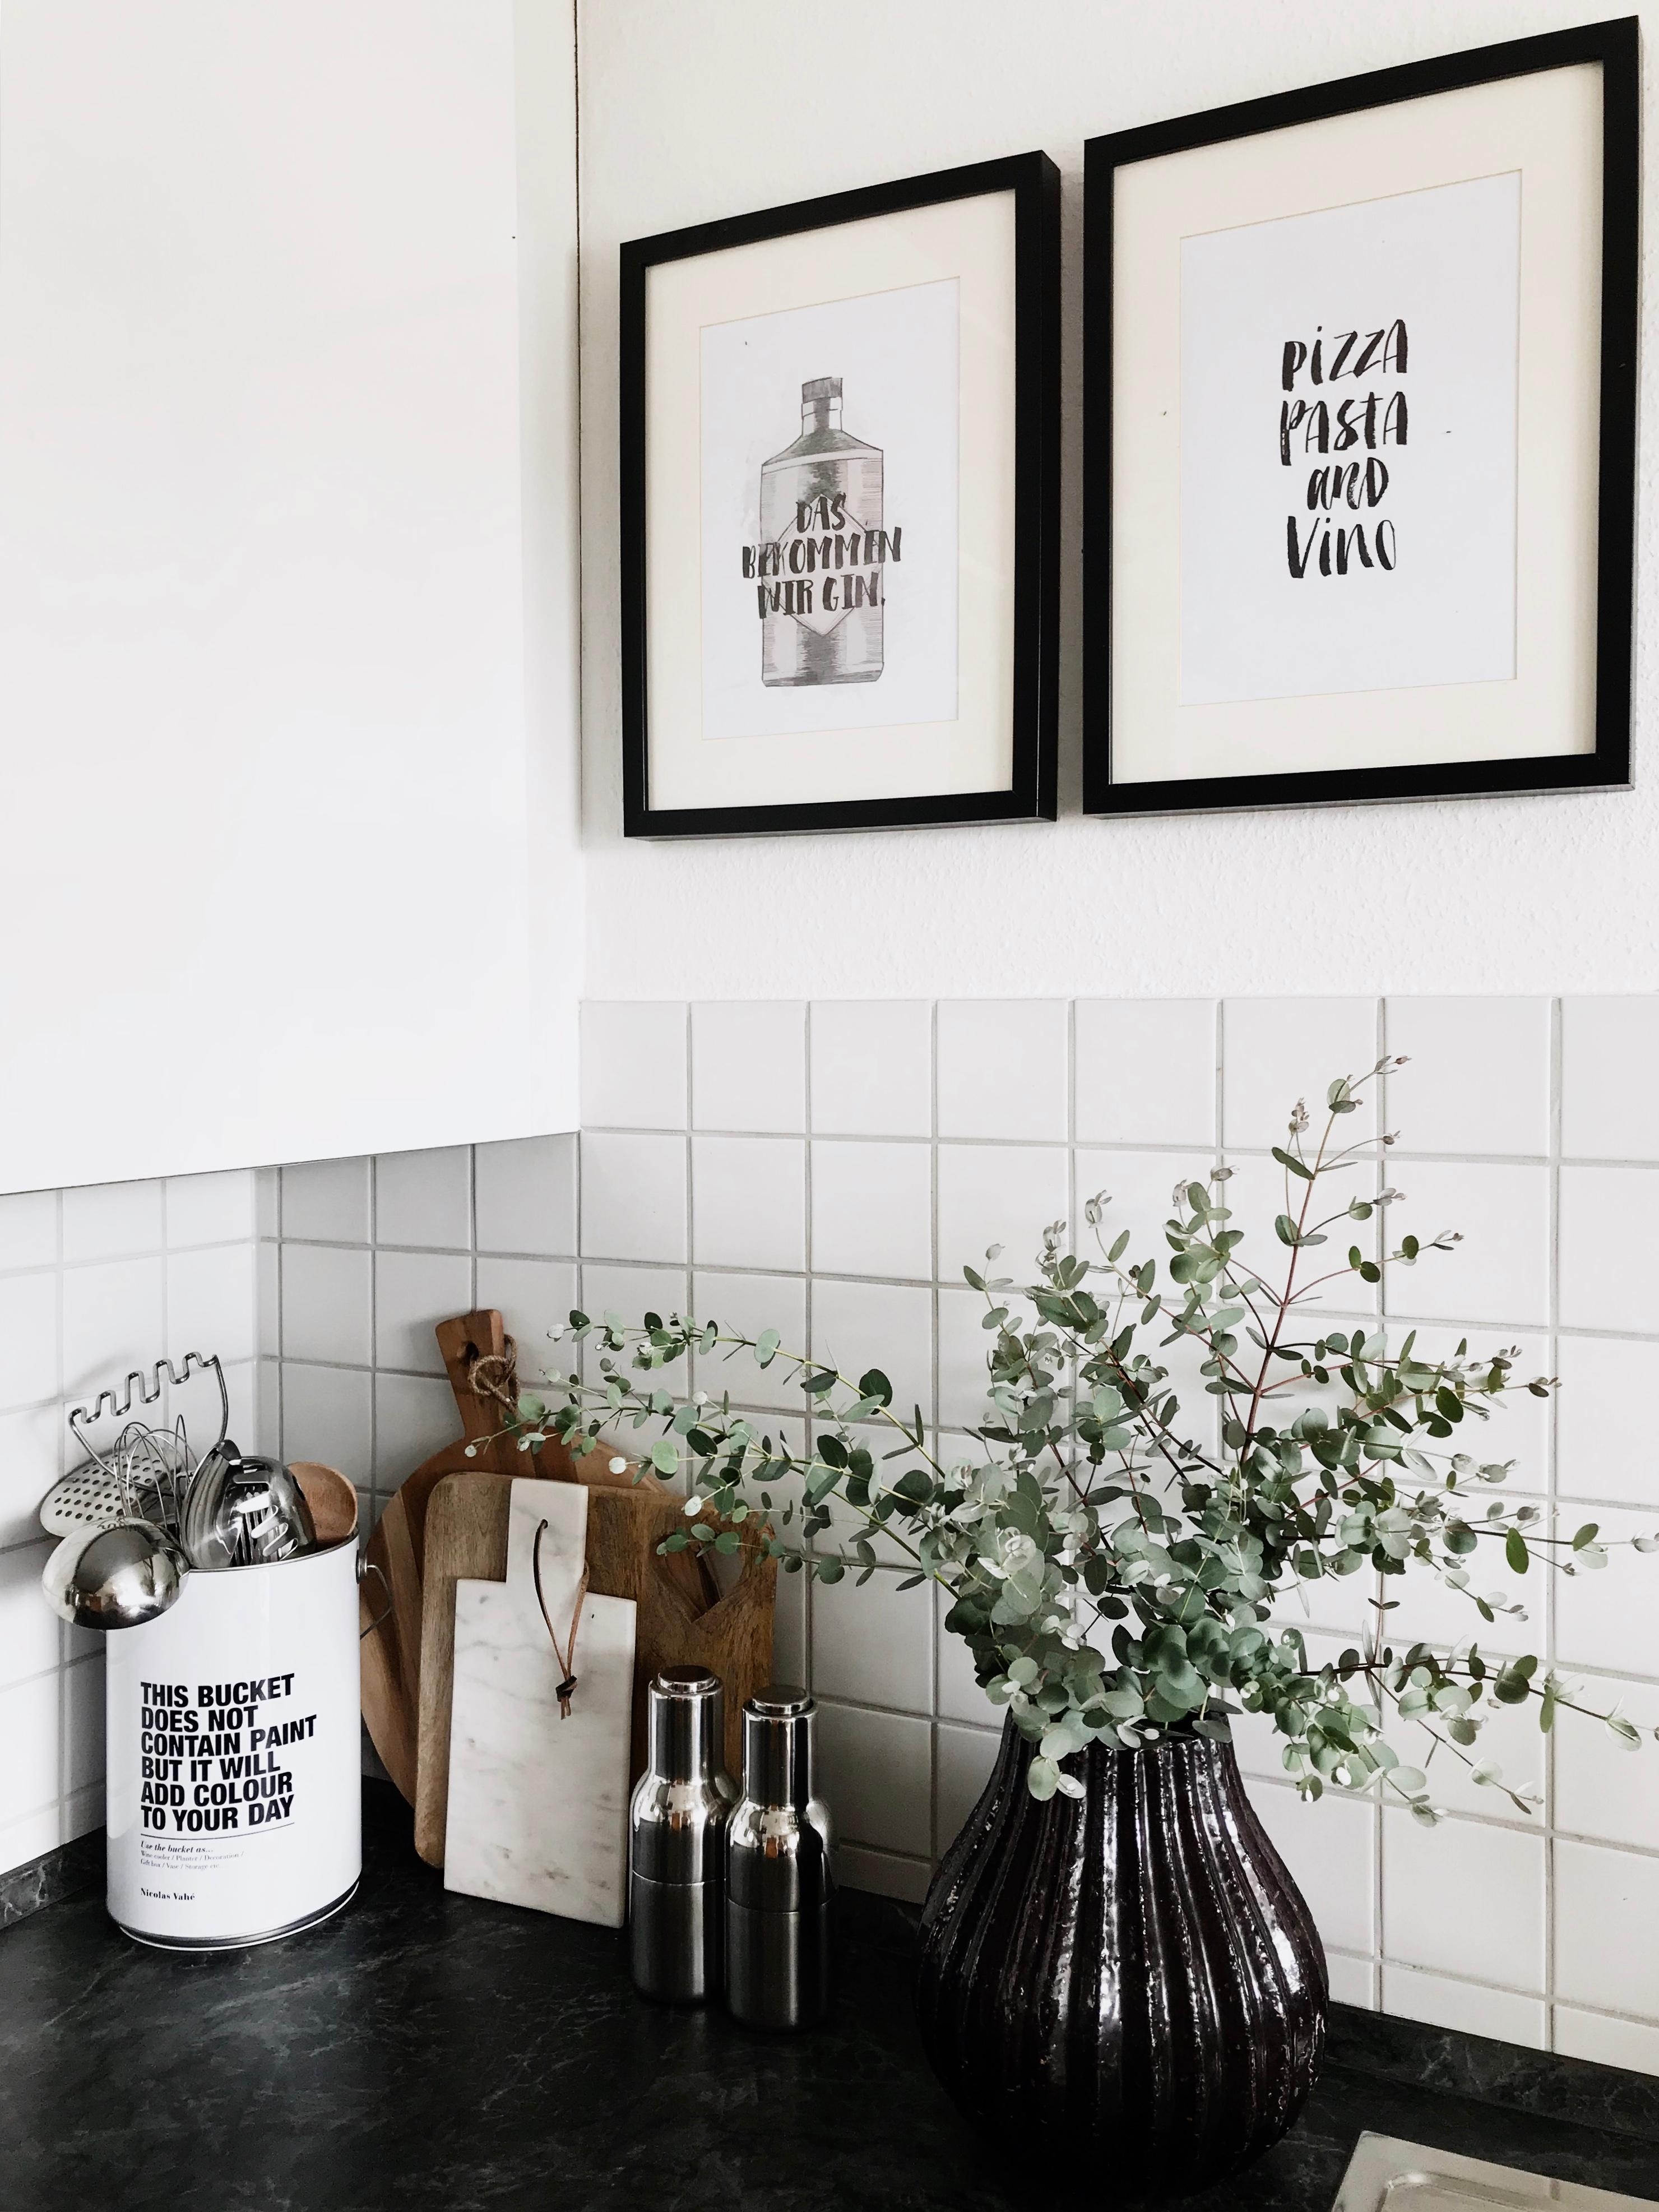 Küche. 🖤
#küche #interior #livingchallenge #homesweethome #eukalyptusliebe #prints 